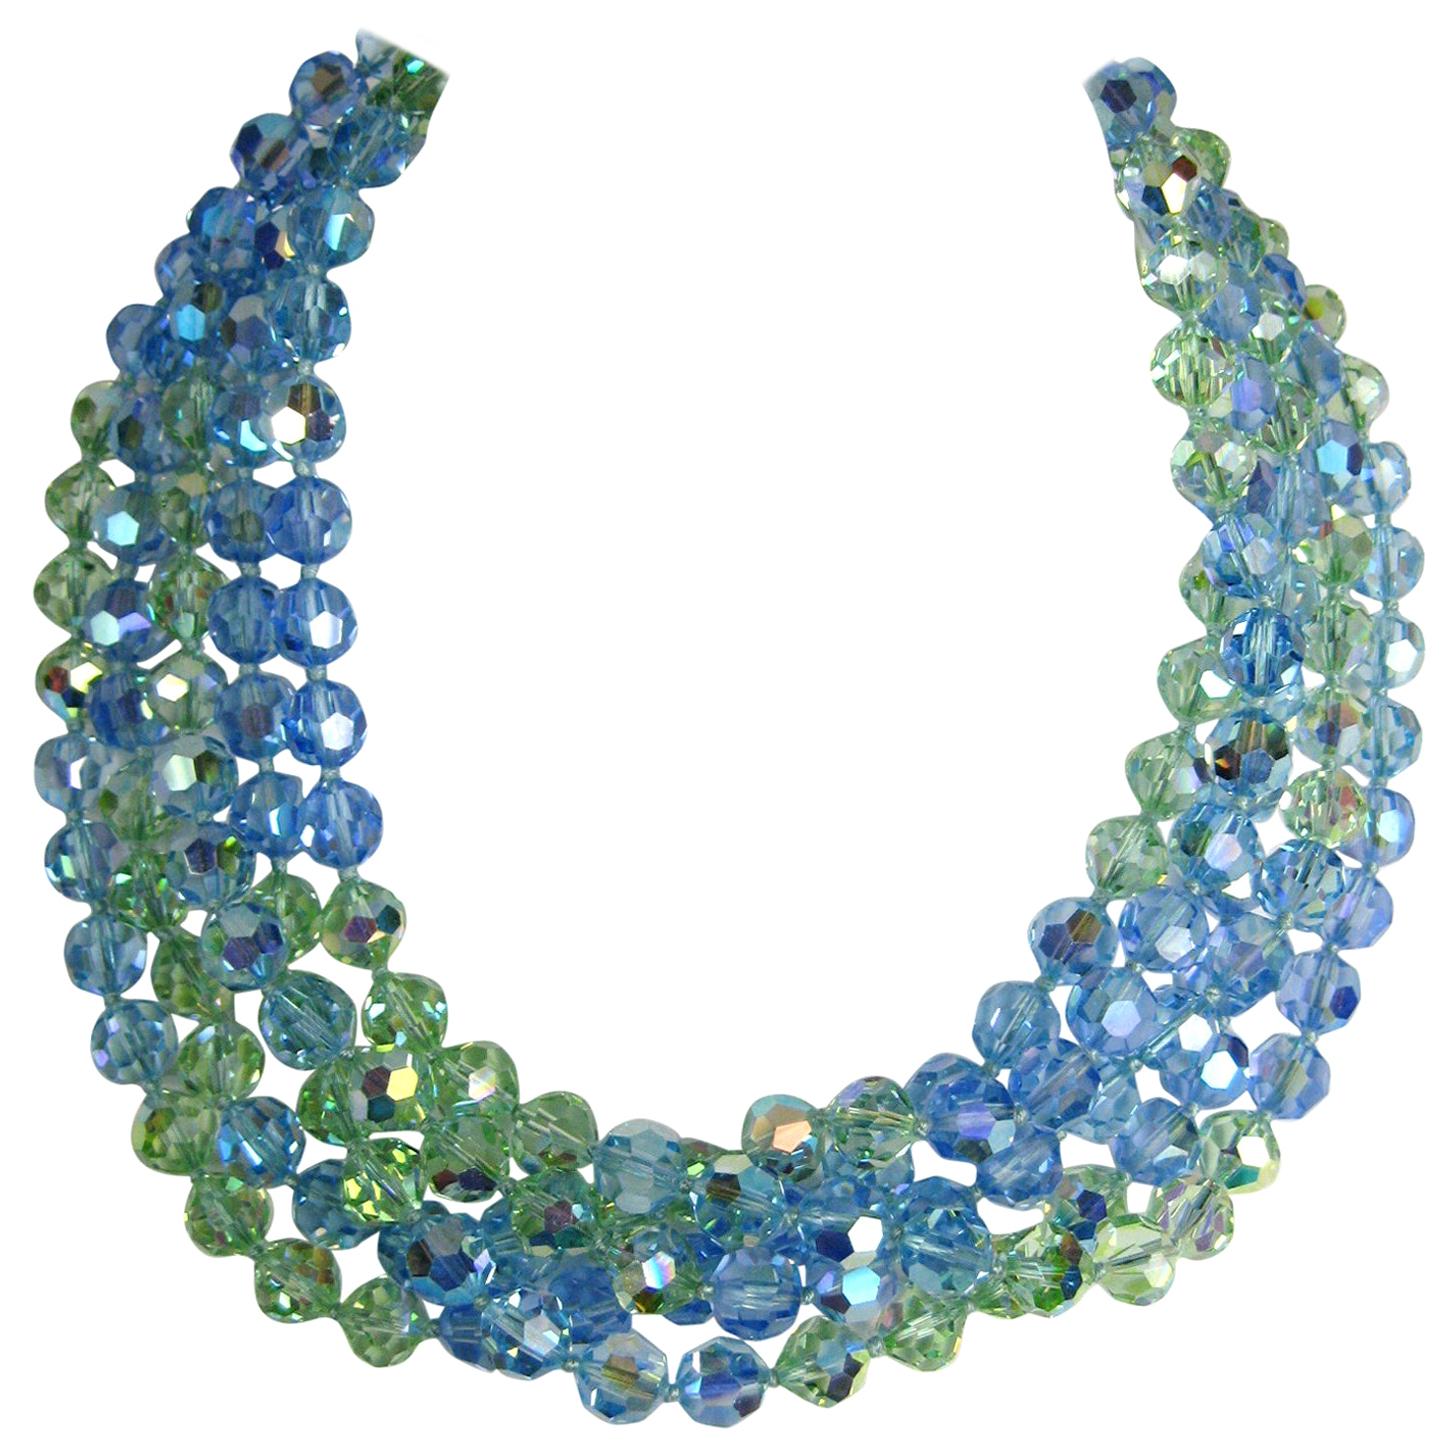  5 Strand Blue Green Crystal Bib Necklace New, Never worn 1990s Ciner 